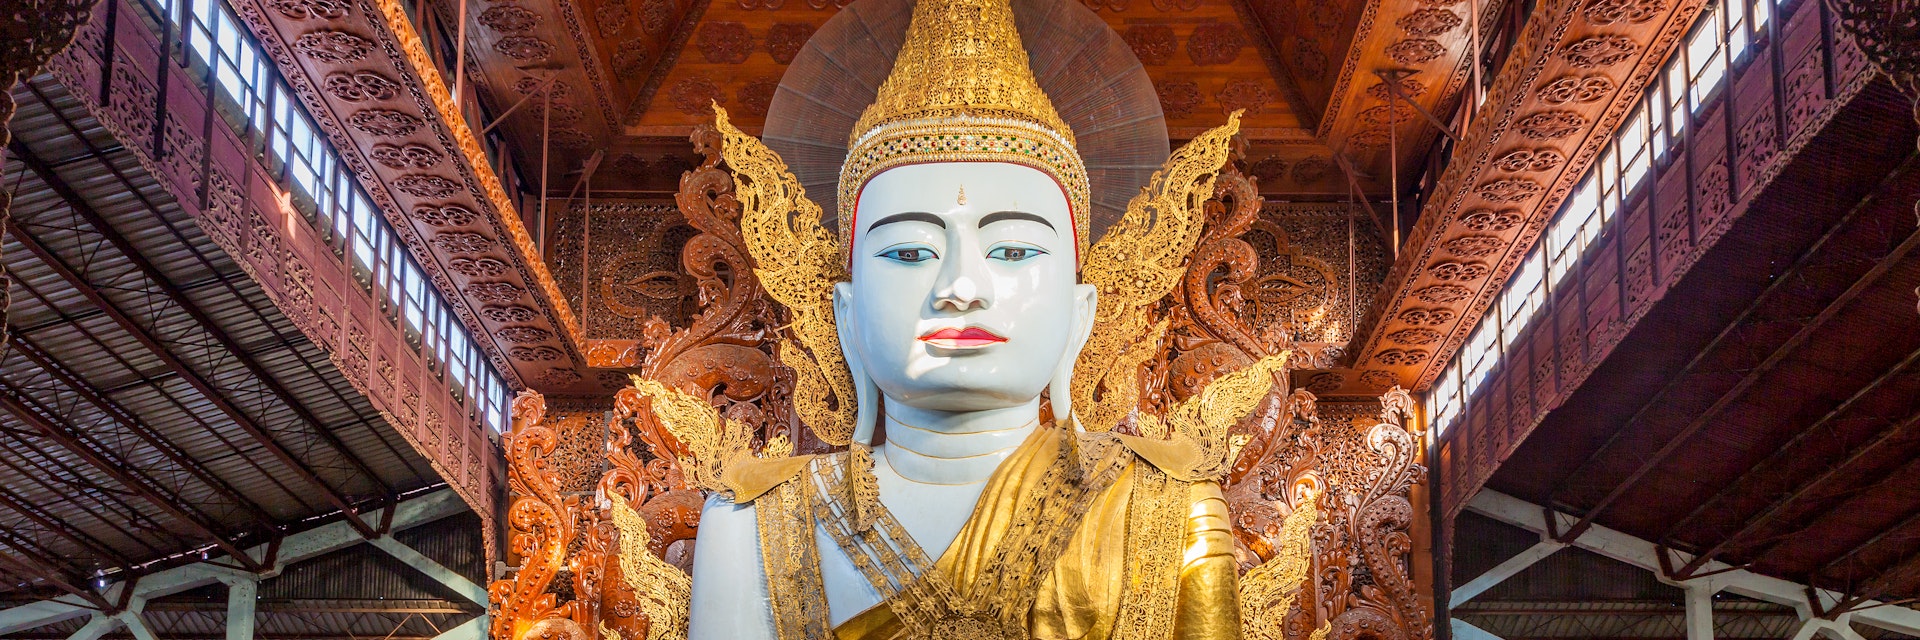 The Budda sculpture in Ngahtatgyi Paya, Yangon, Myanmar.
